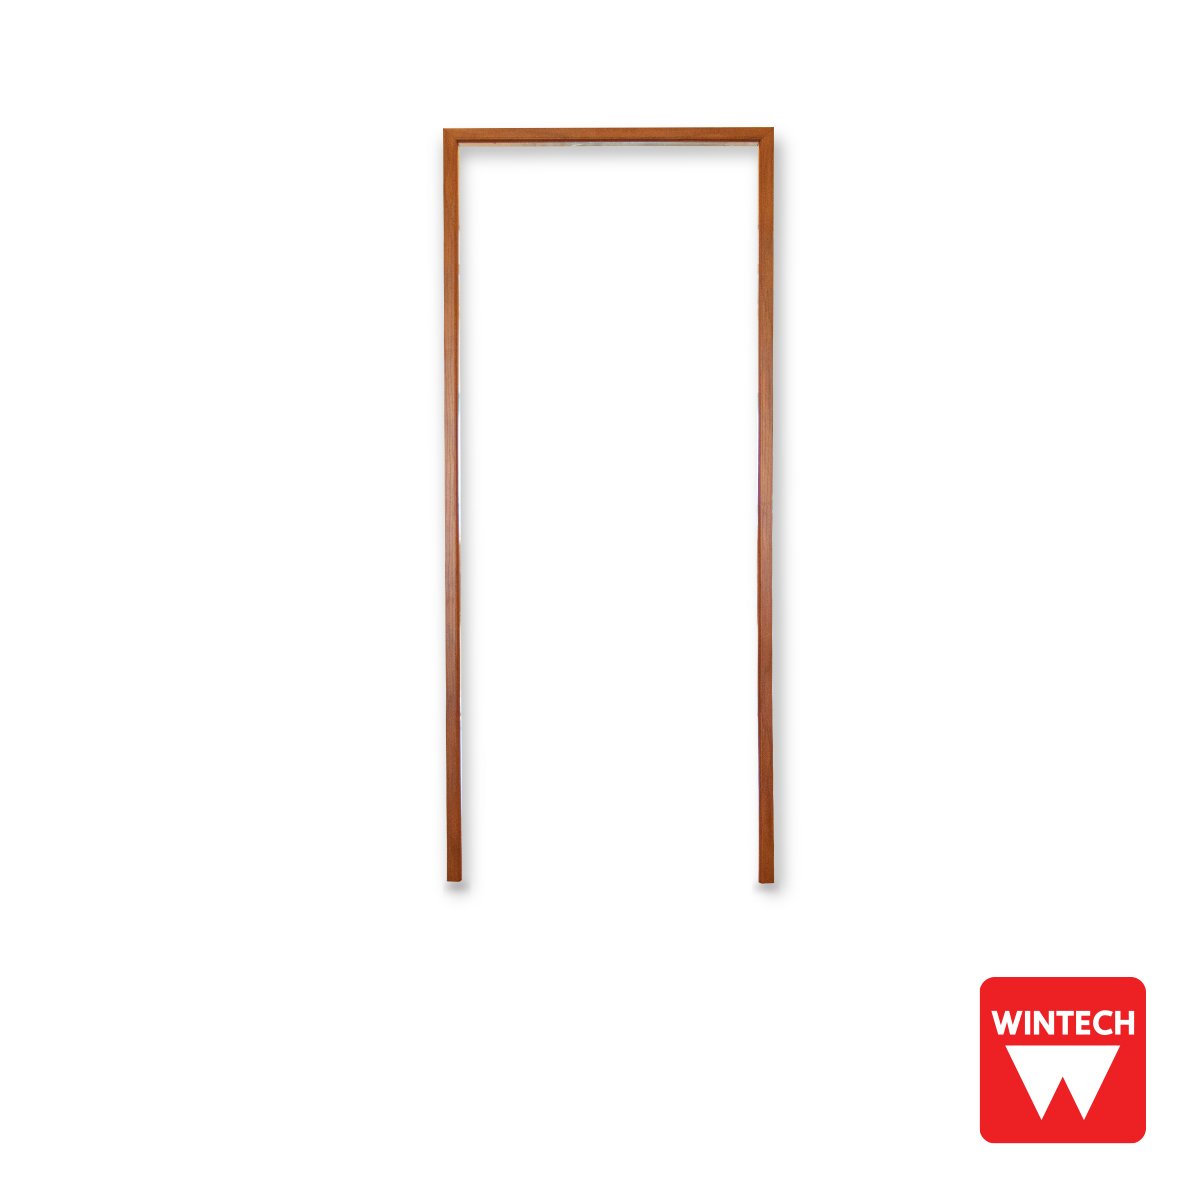 Red Oak PVC Door Frame with Wintech Frame Lining